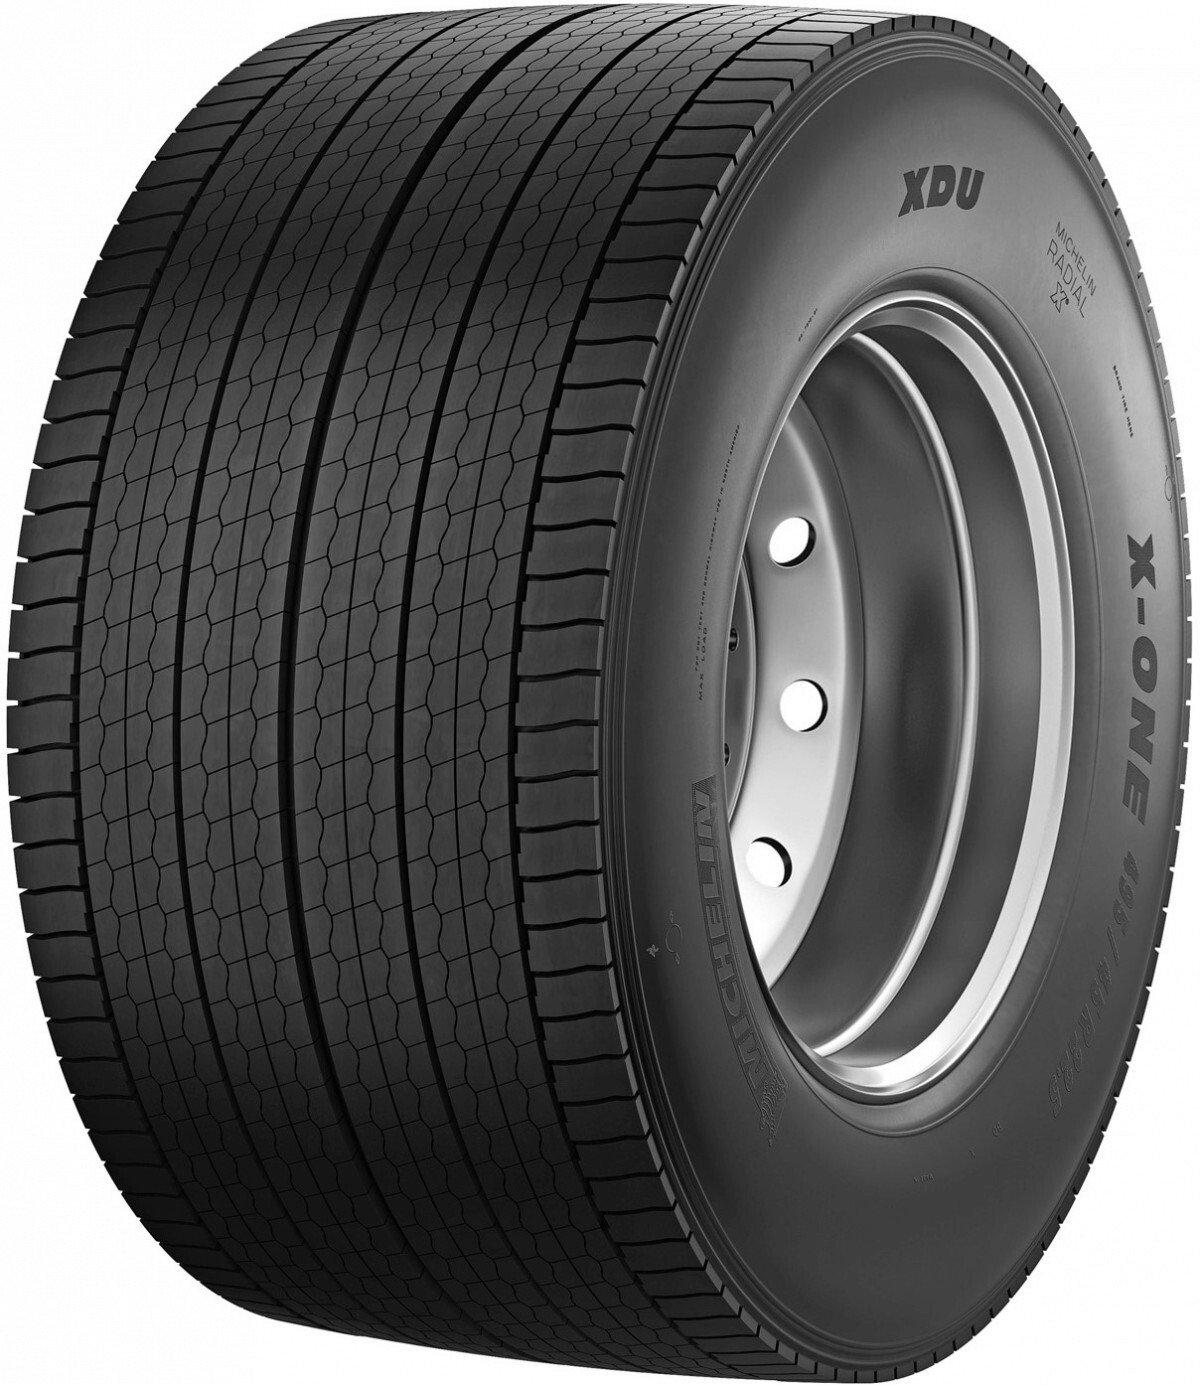 Michelin X One XDU Tyres